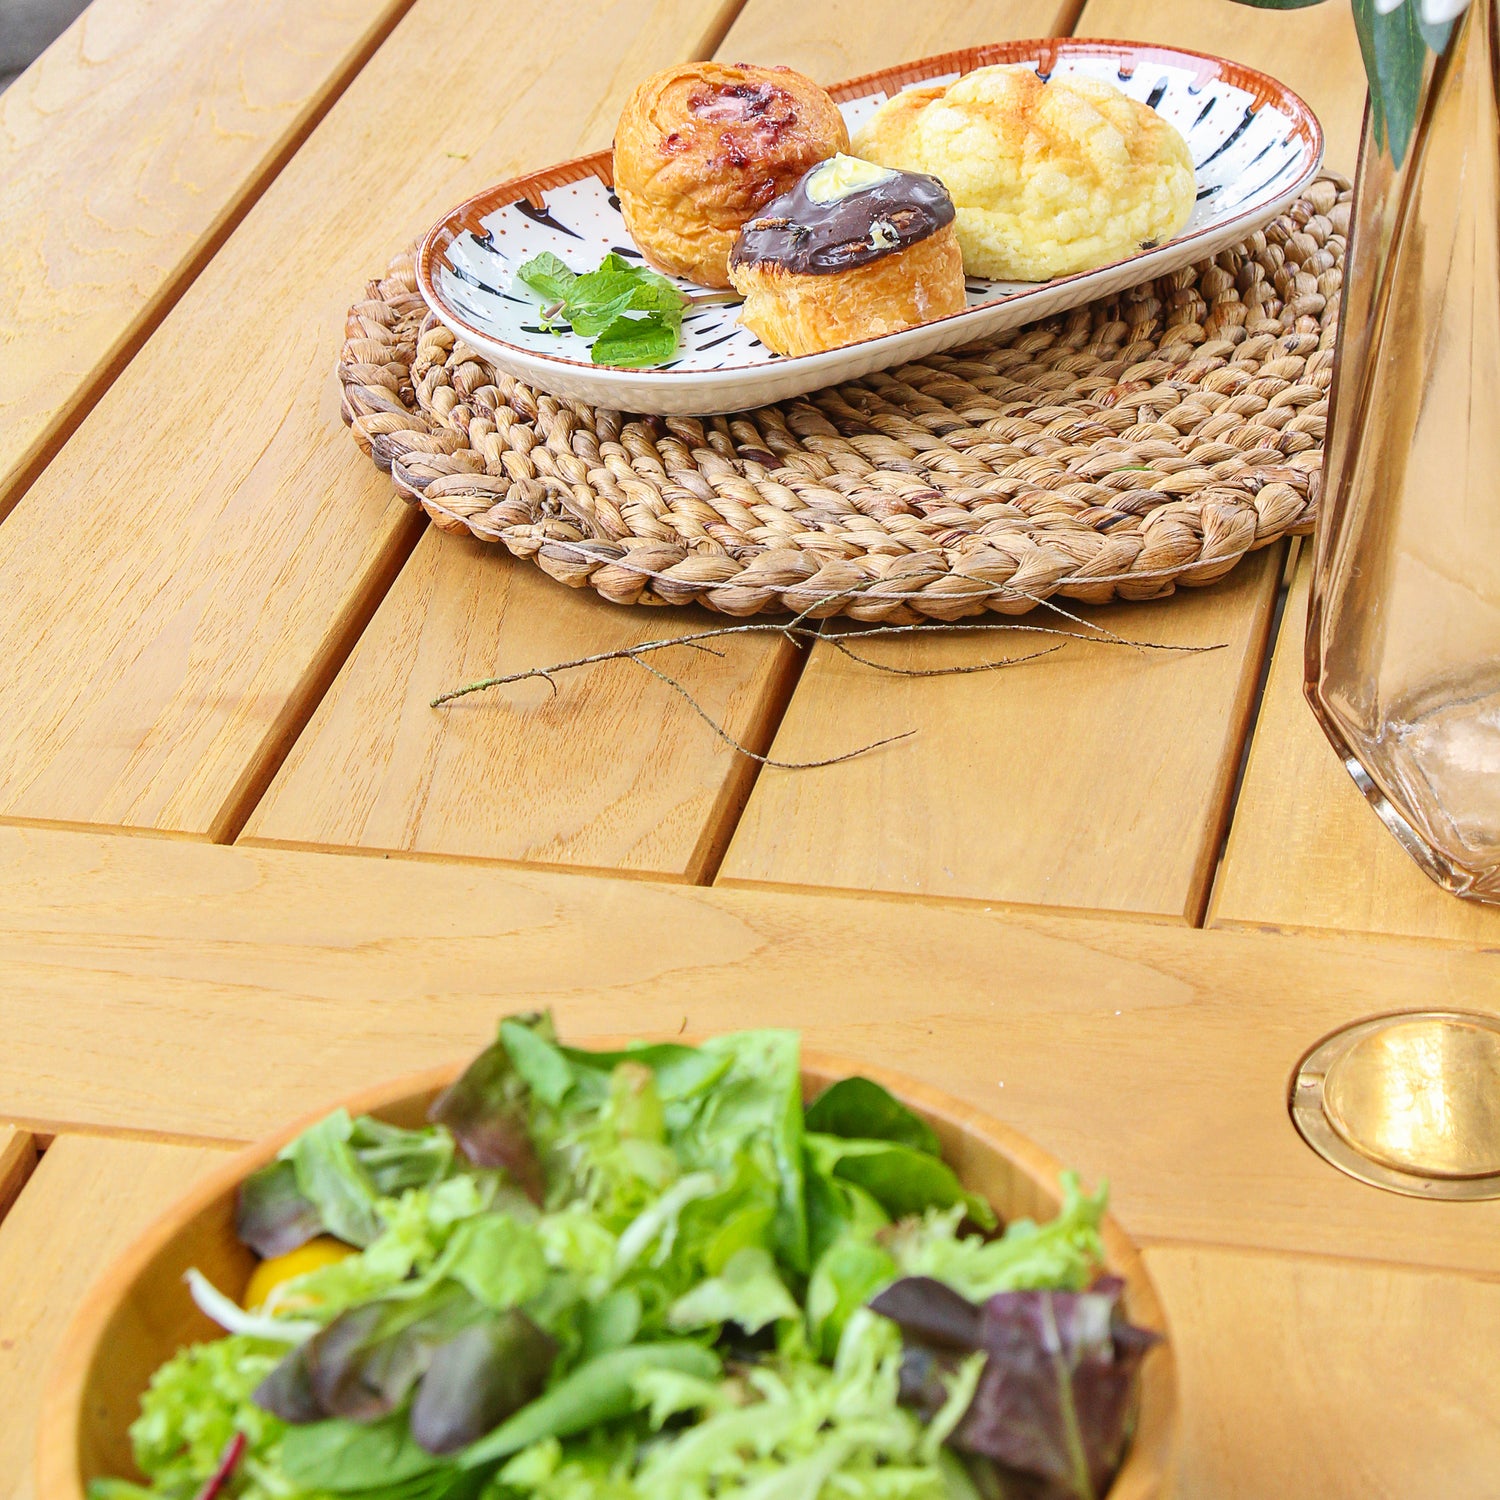 Zephyr Teak Wood 7 Piece Outdoor Dining Set with Tan Polyrope